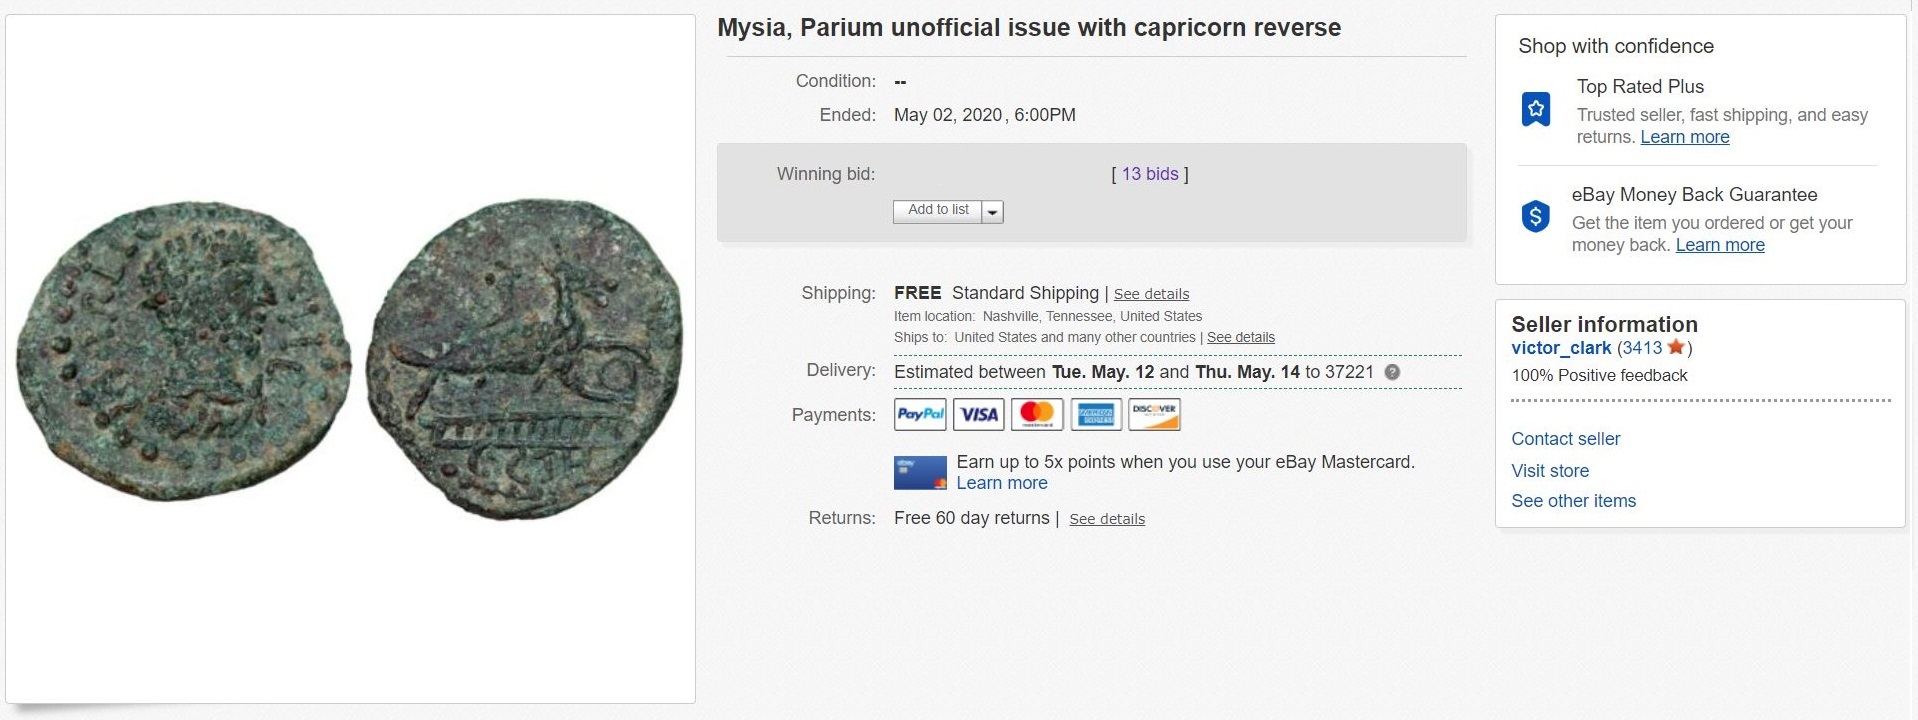 'Mysia, Parium unofficial issue with capricorn reverse I eBay' - www_ebay_com.jpg